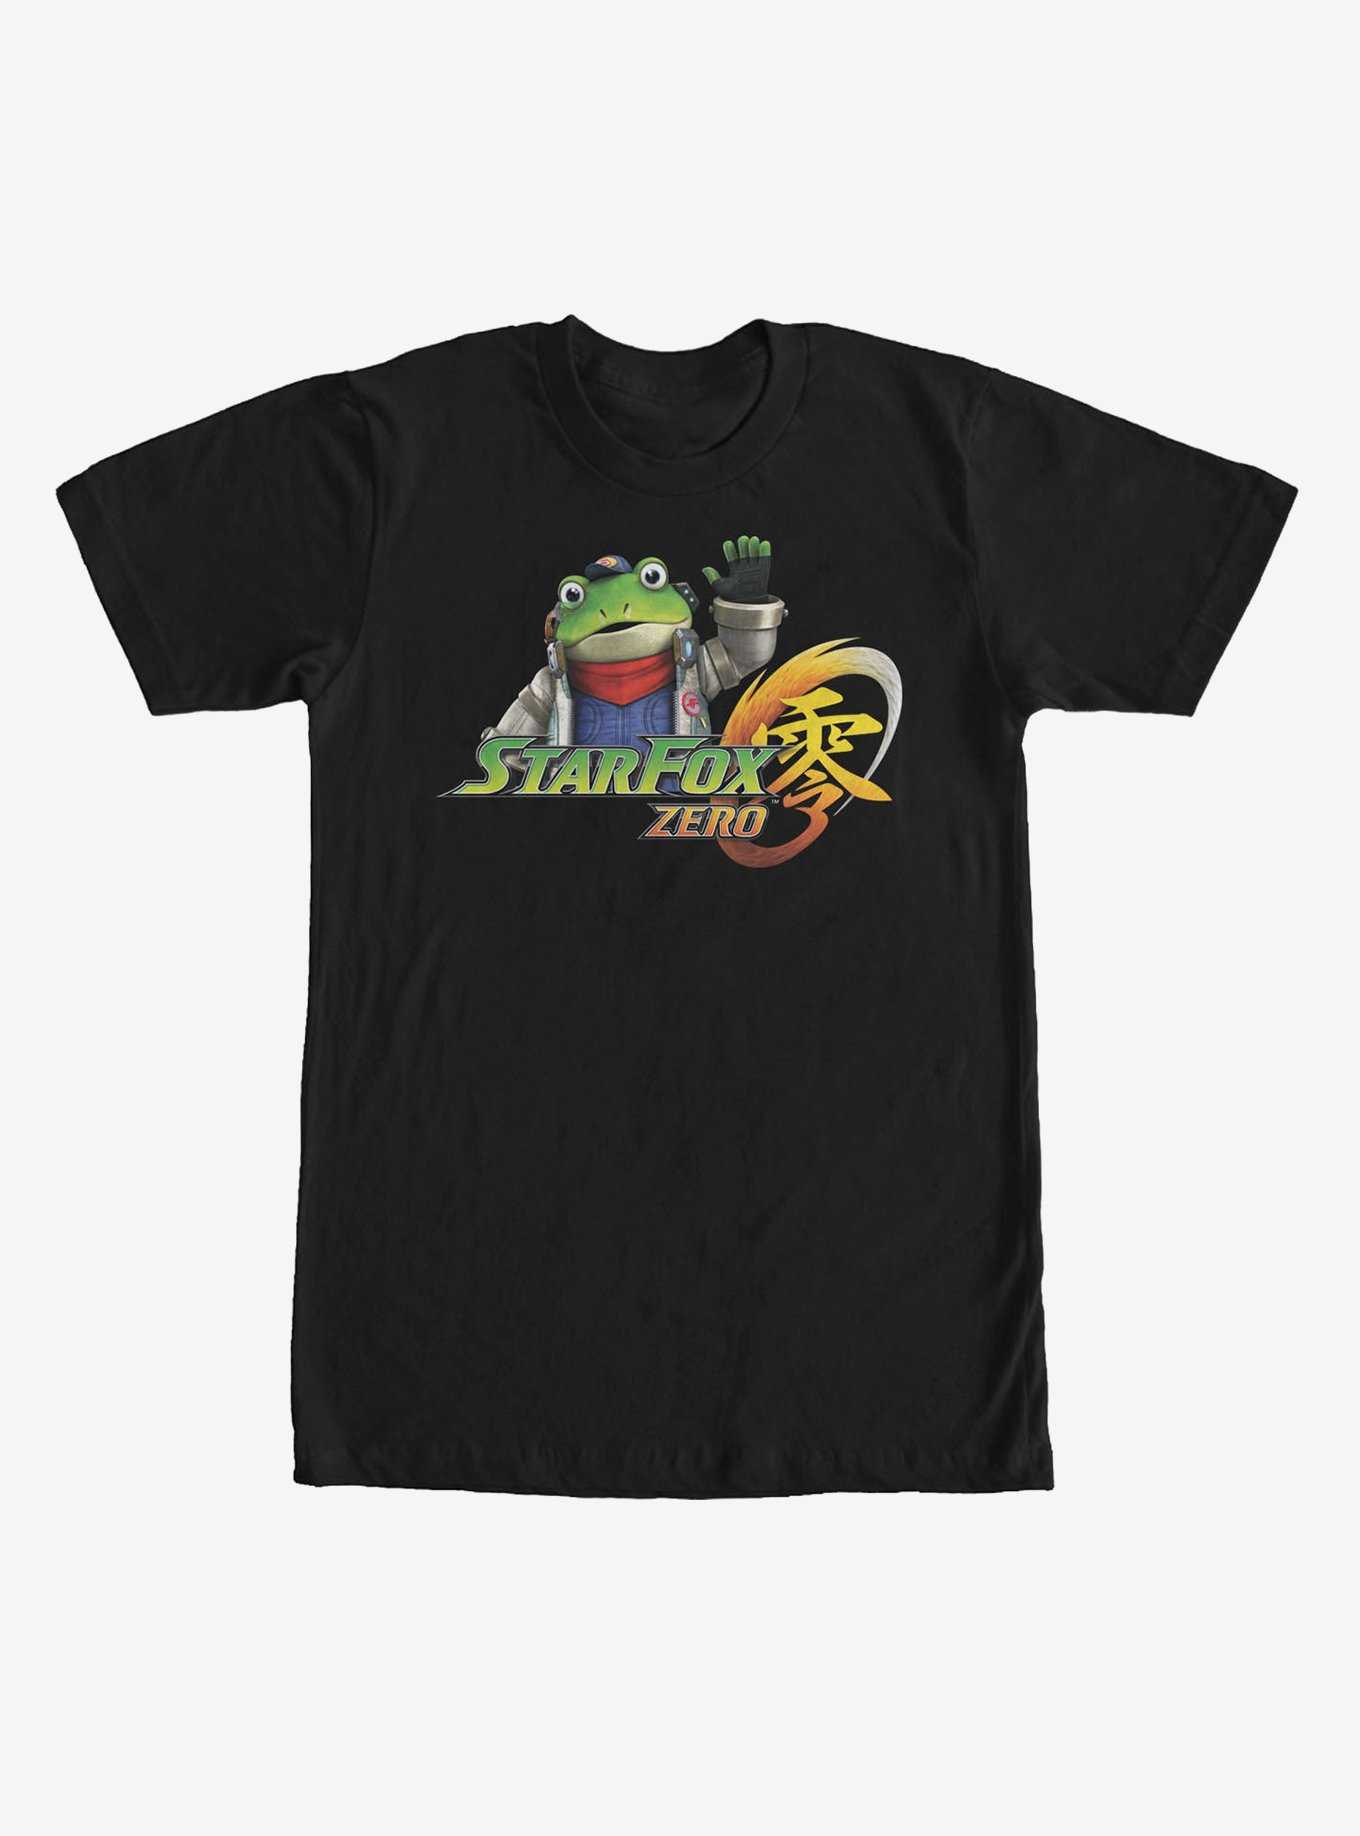 Nintendo Star Fox Zero Slippy Toad T-Shirt, , hi-res